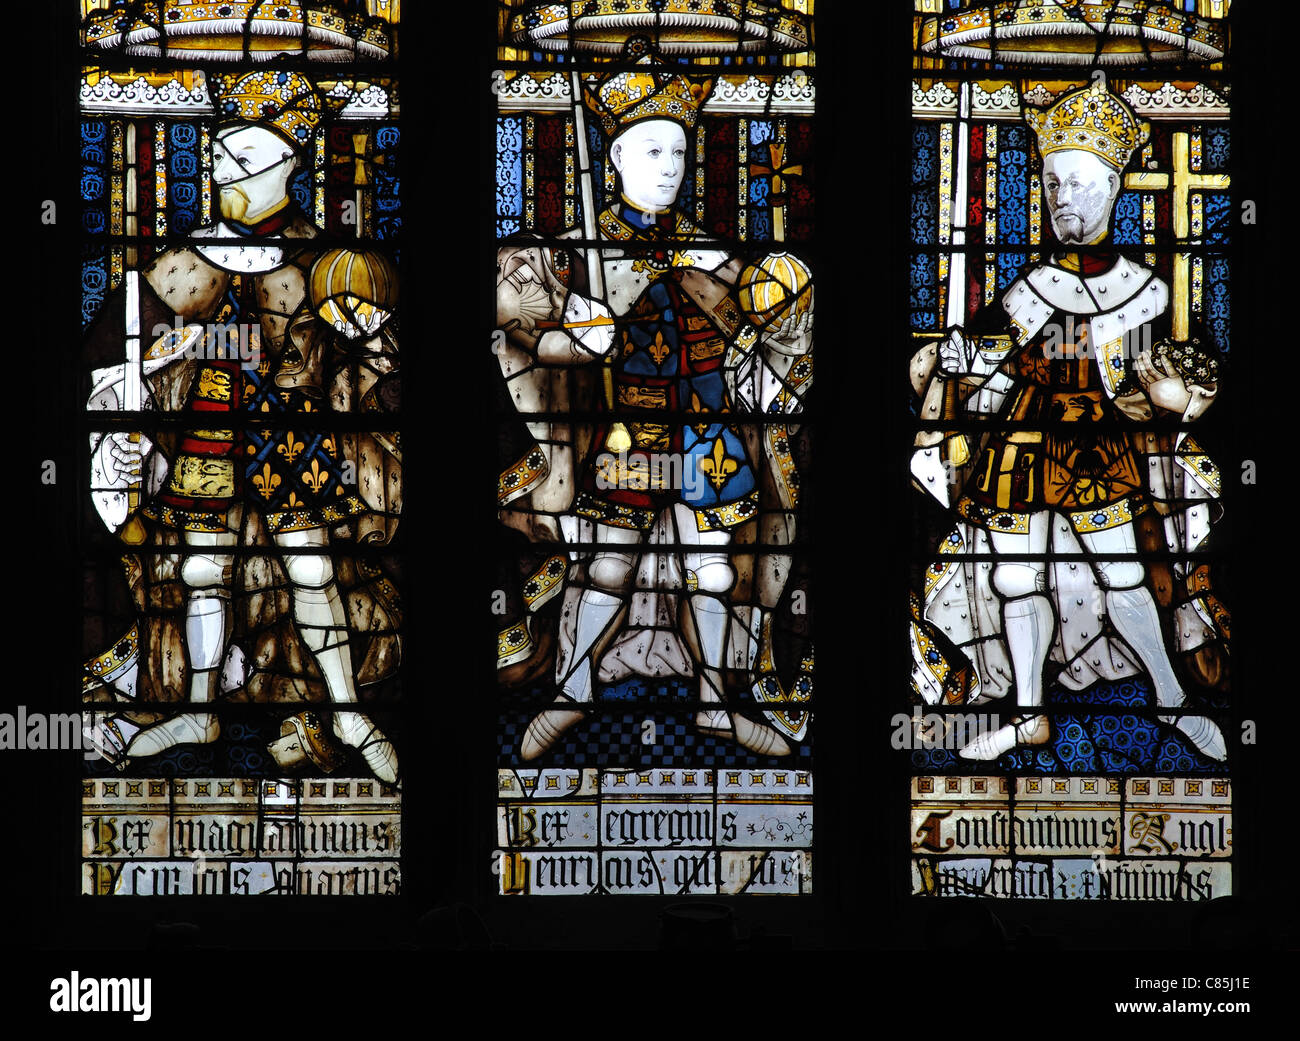 König Henry IV, König Henry V und Konstantin der große Glasmalerei, St. Marien Guildhall, Coventry, UK Stockfoto